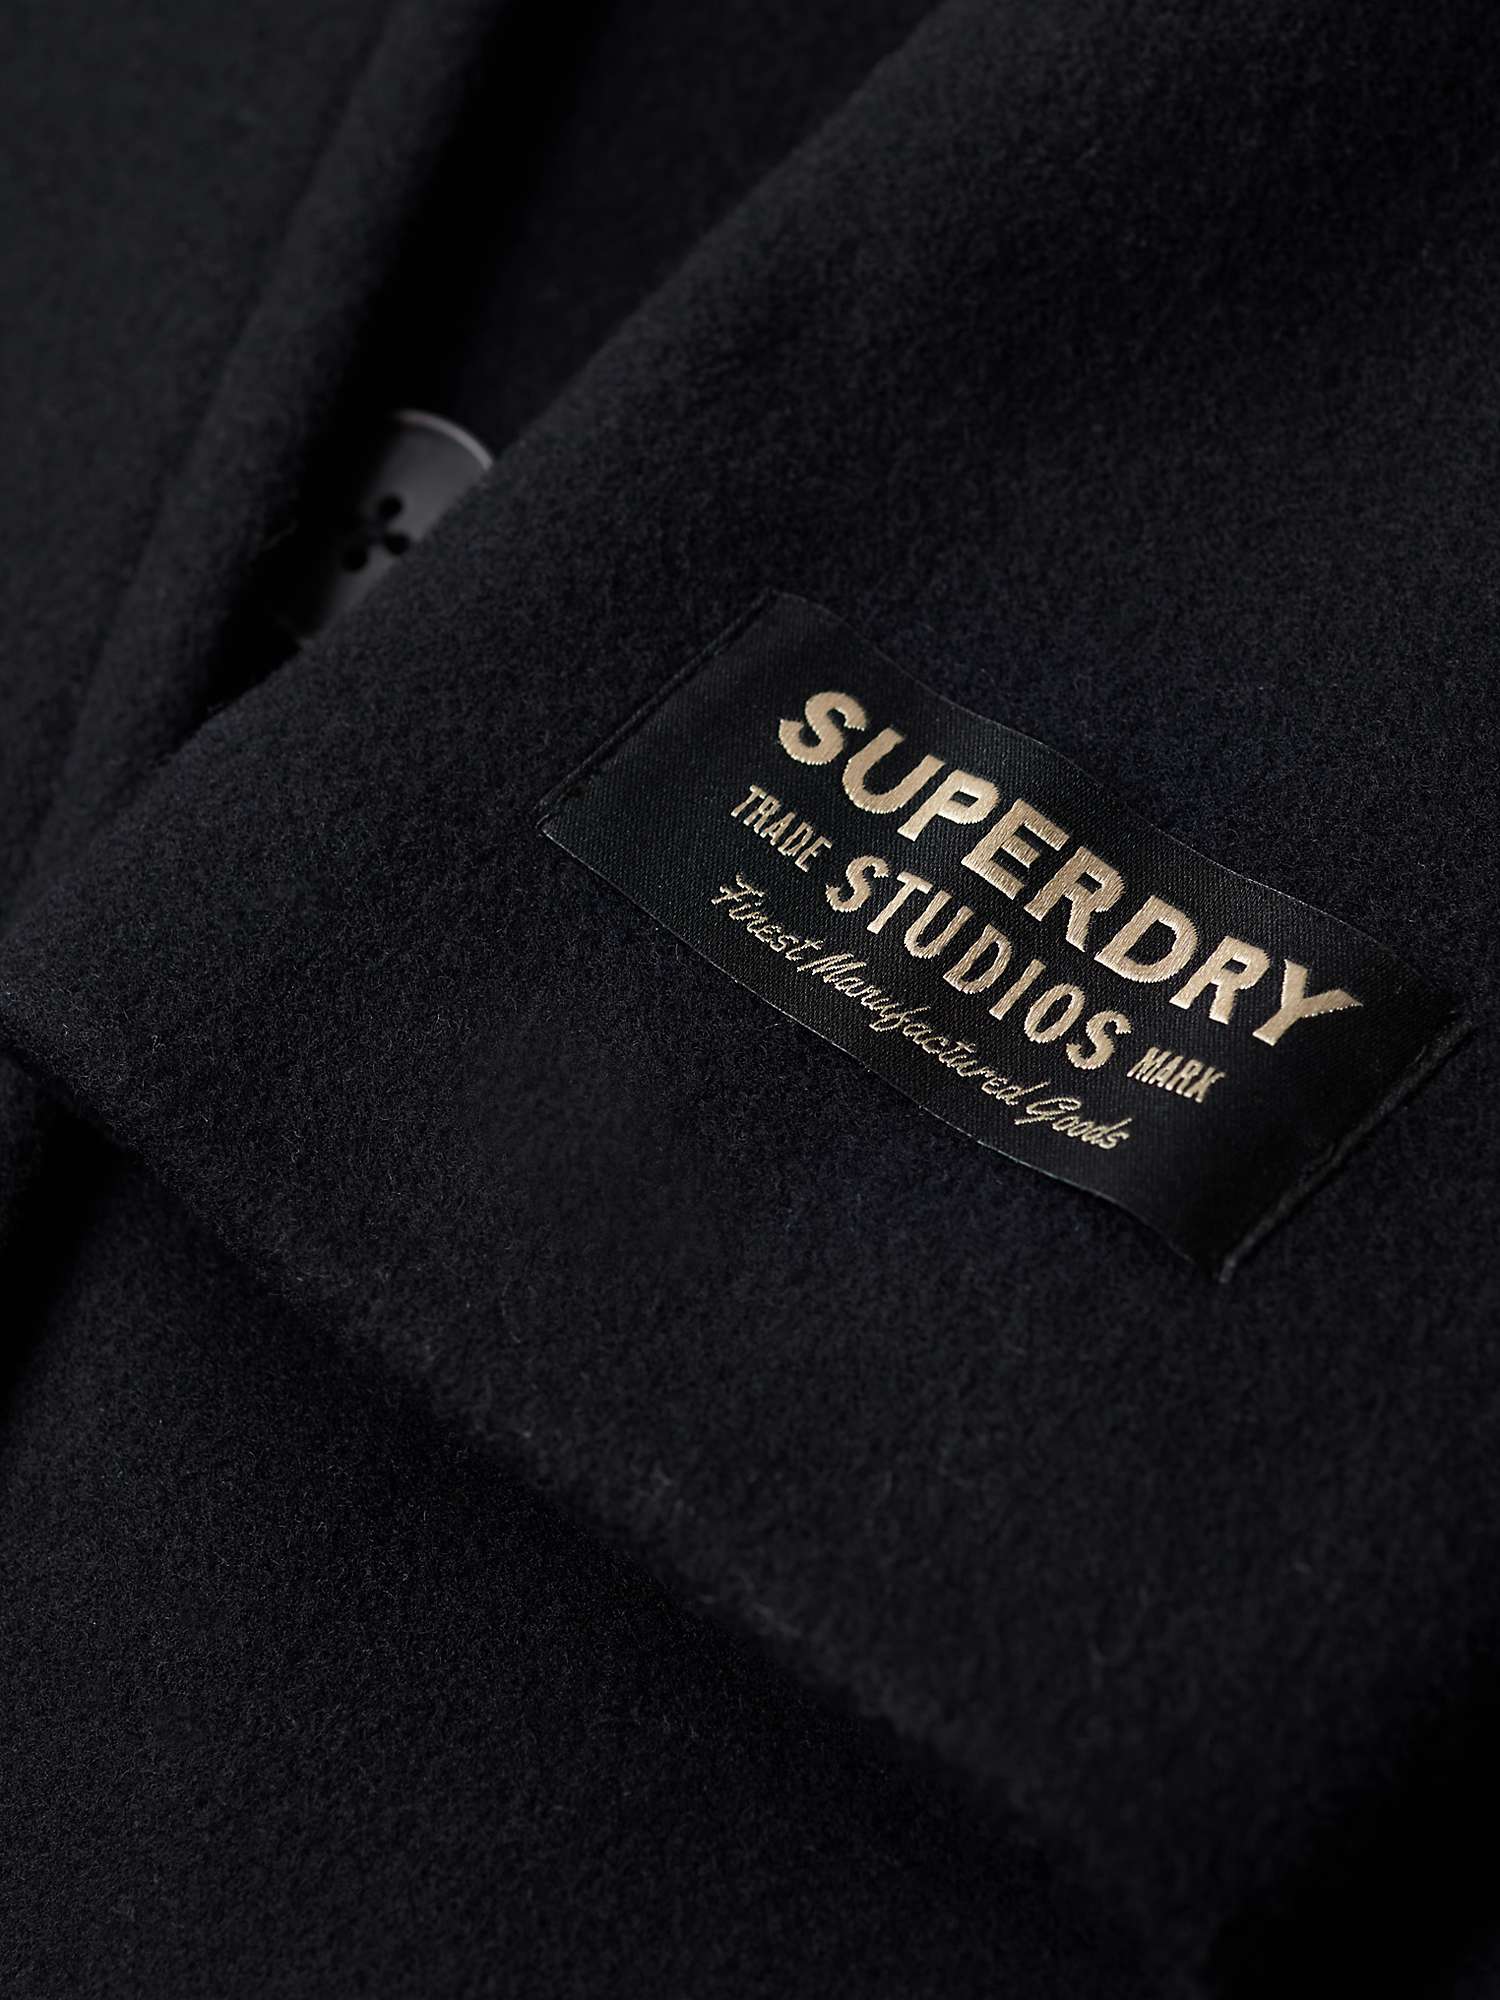 Buy Superdry 2 In 1 Wool Blend Pea Coat, Eclipse Navy Online at johnlewis.com